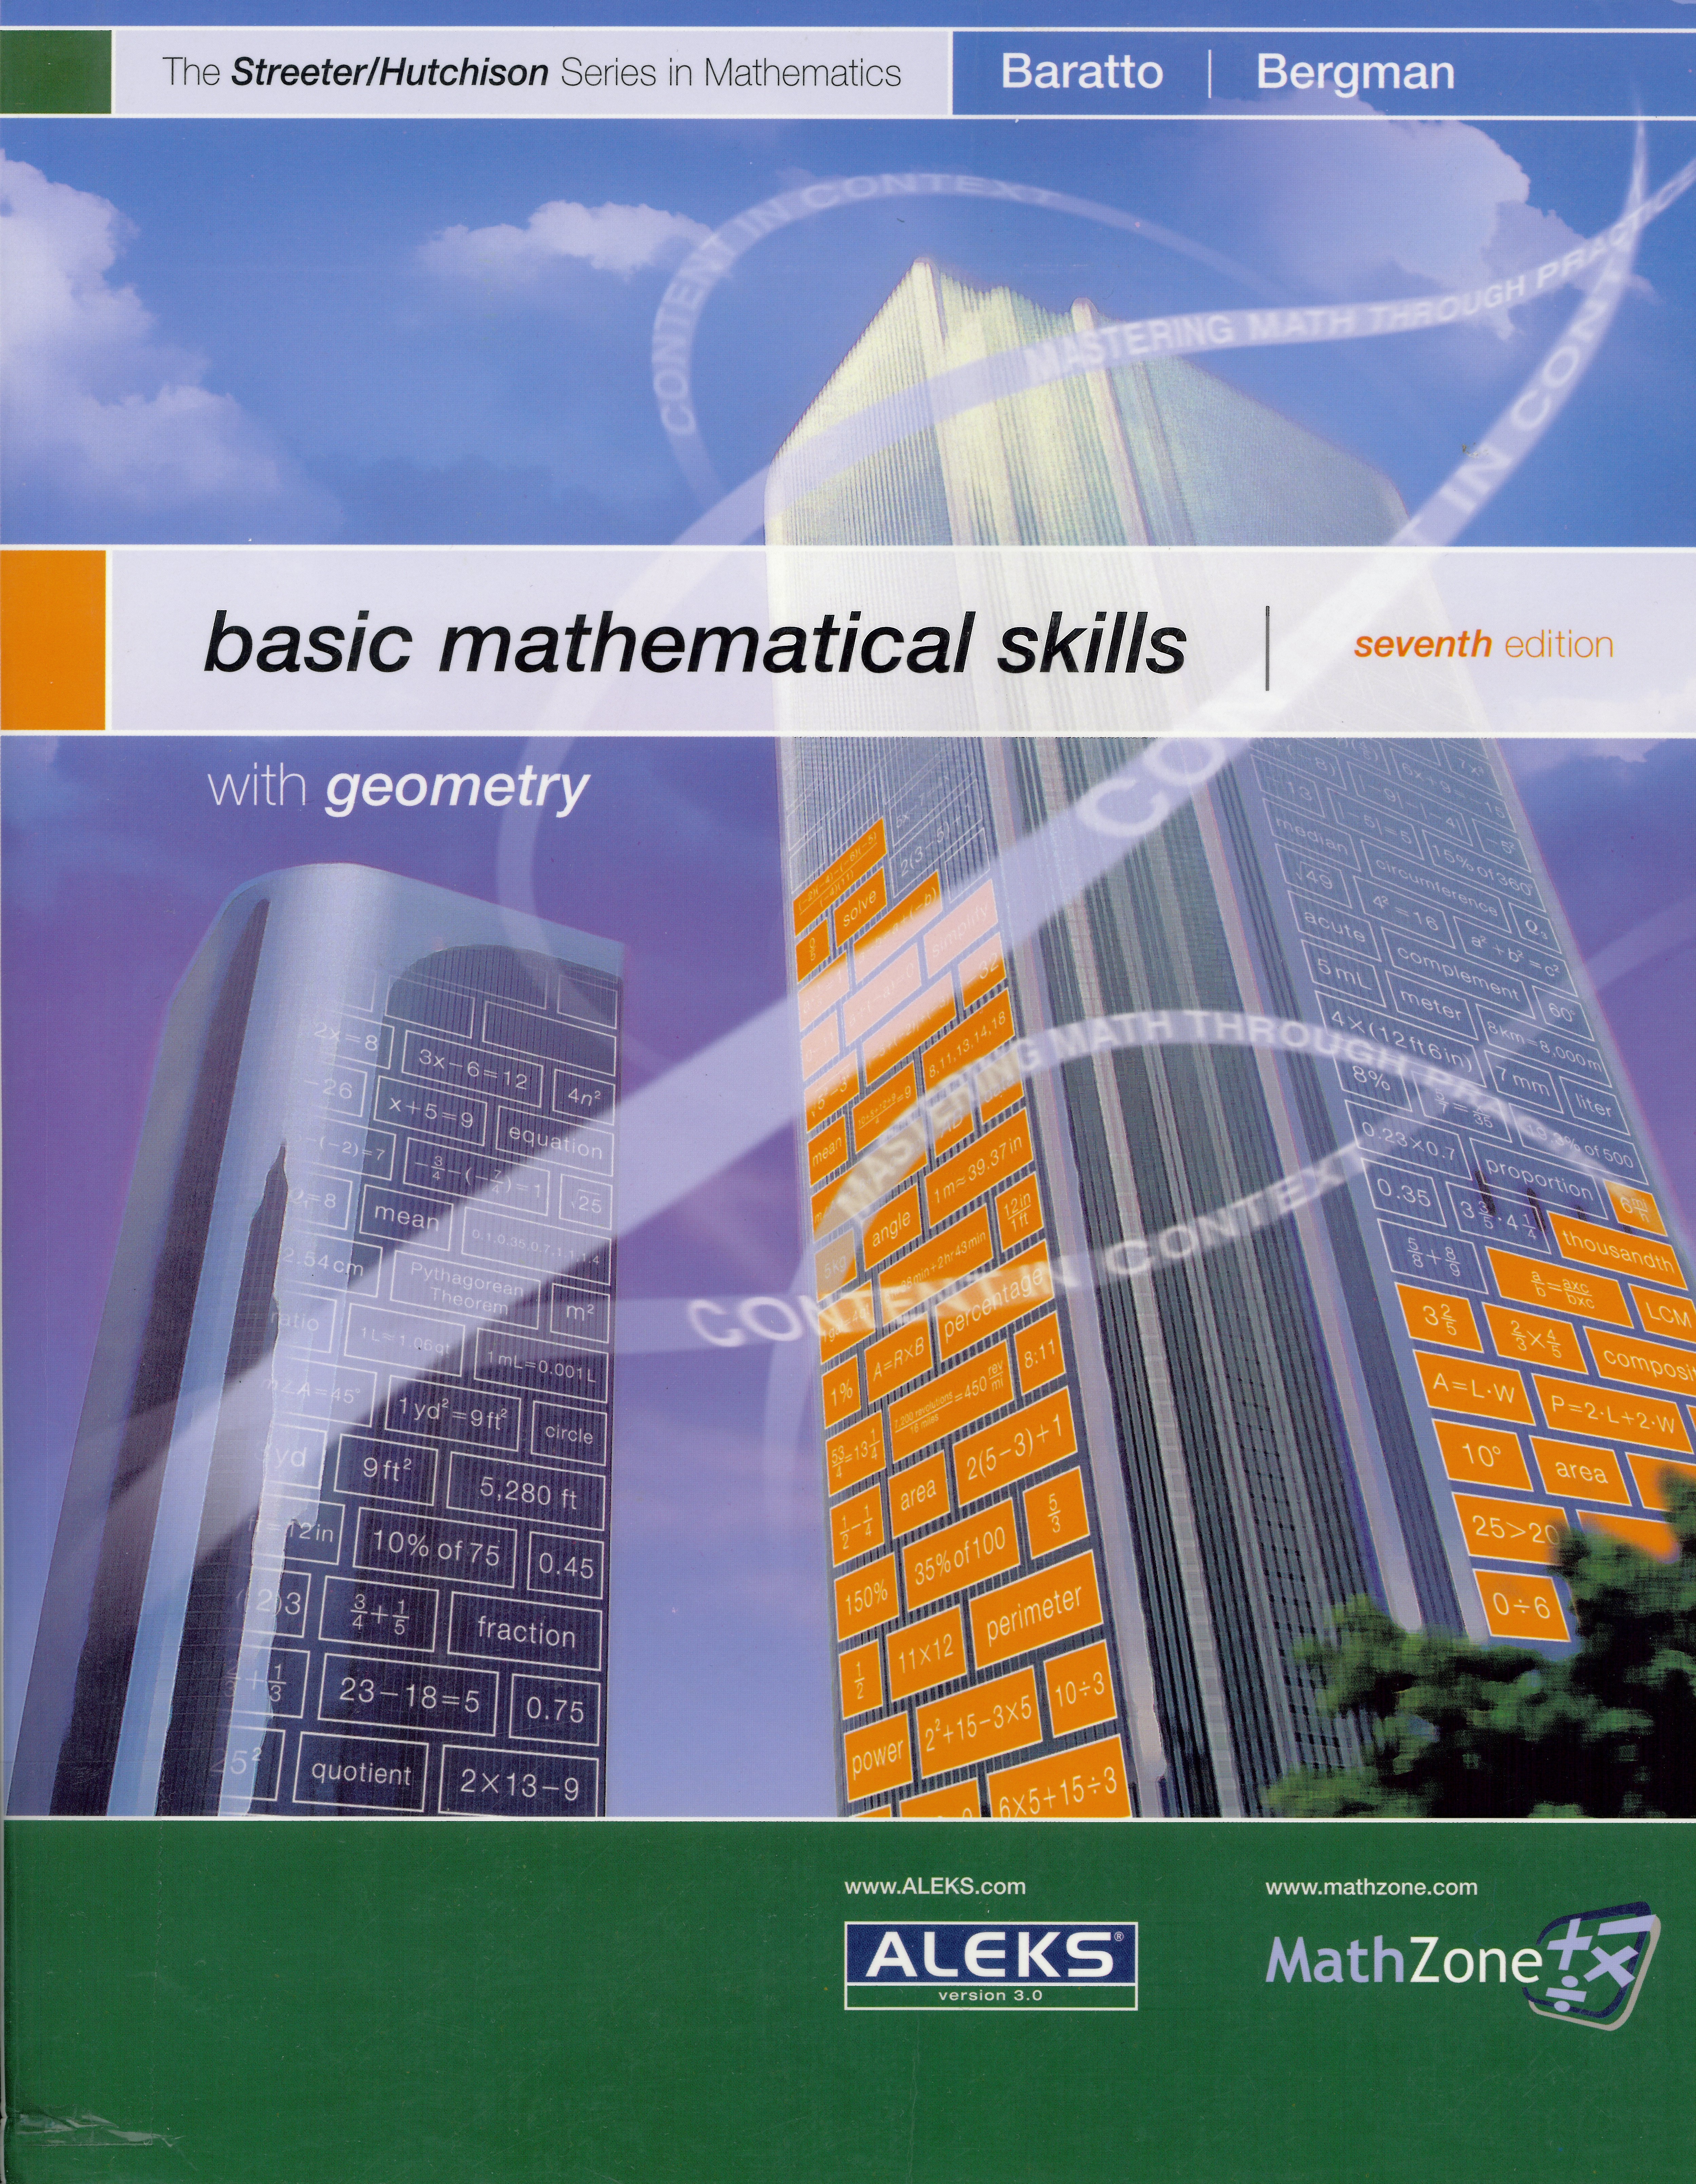 Basic mathematical skills with geometry